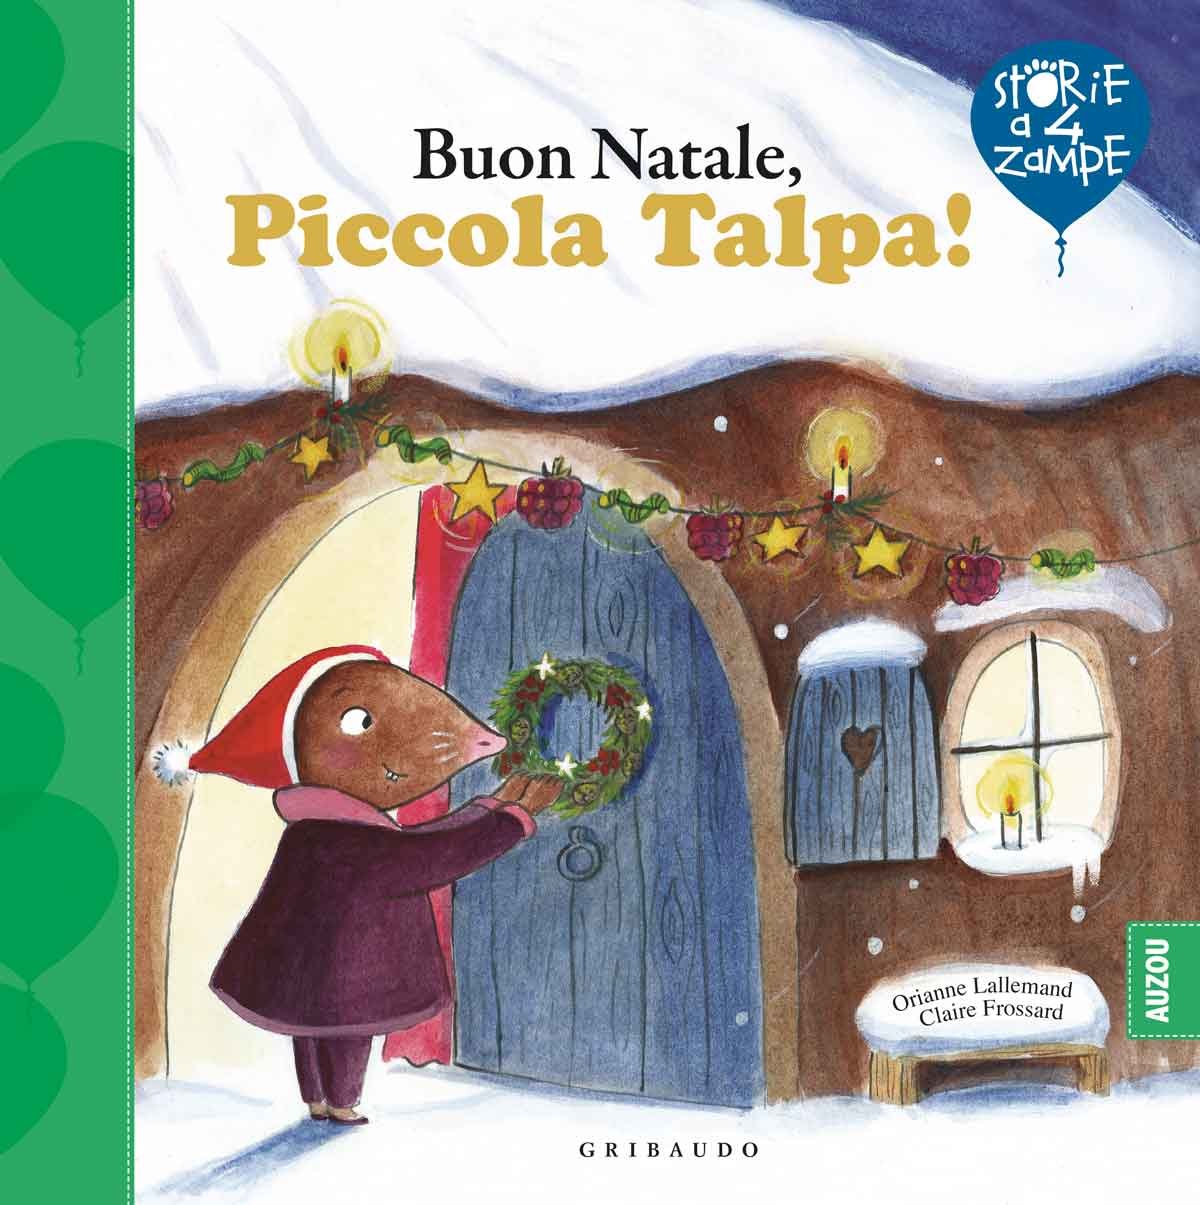 Buon Natale, Piccola Talpa!